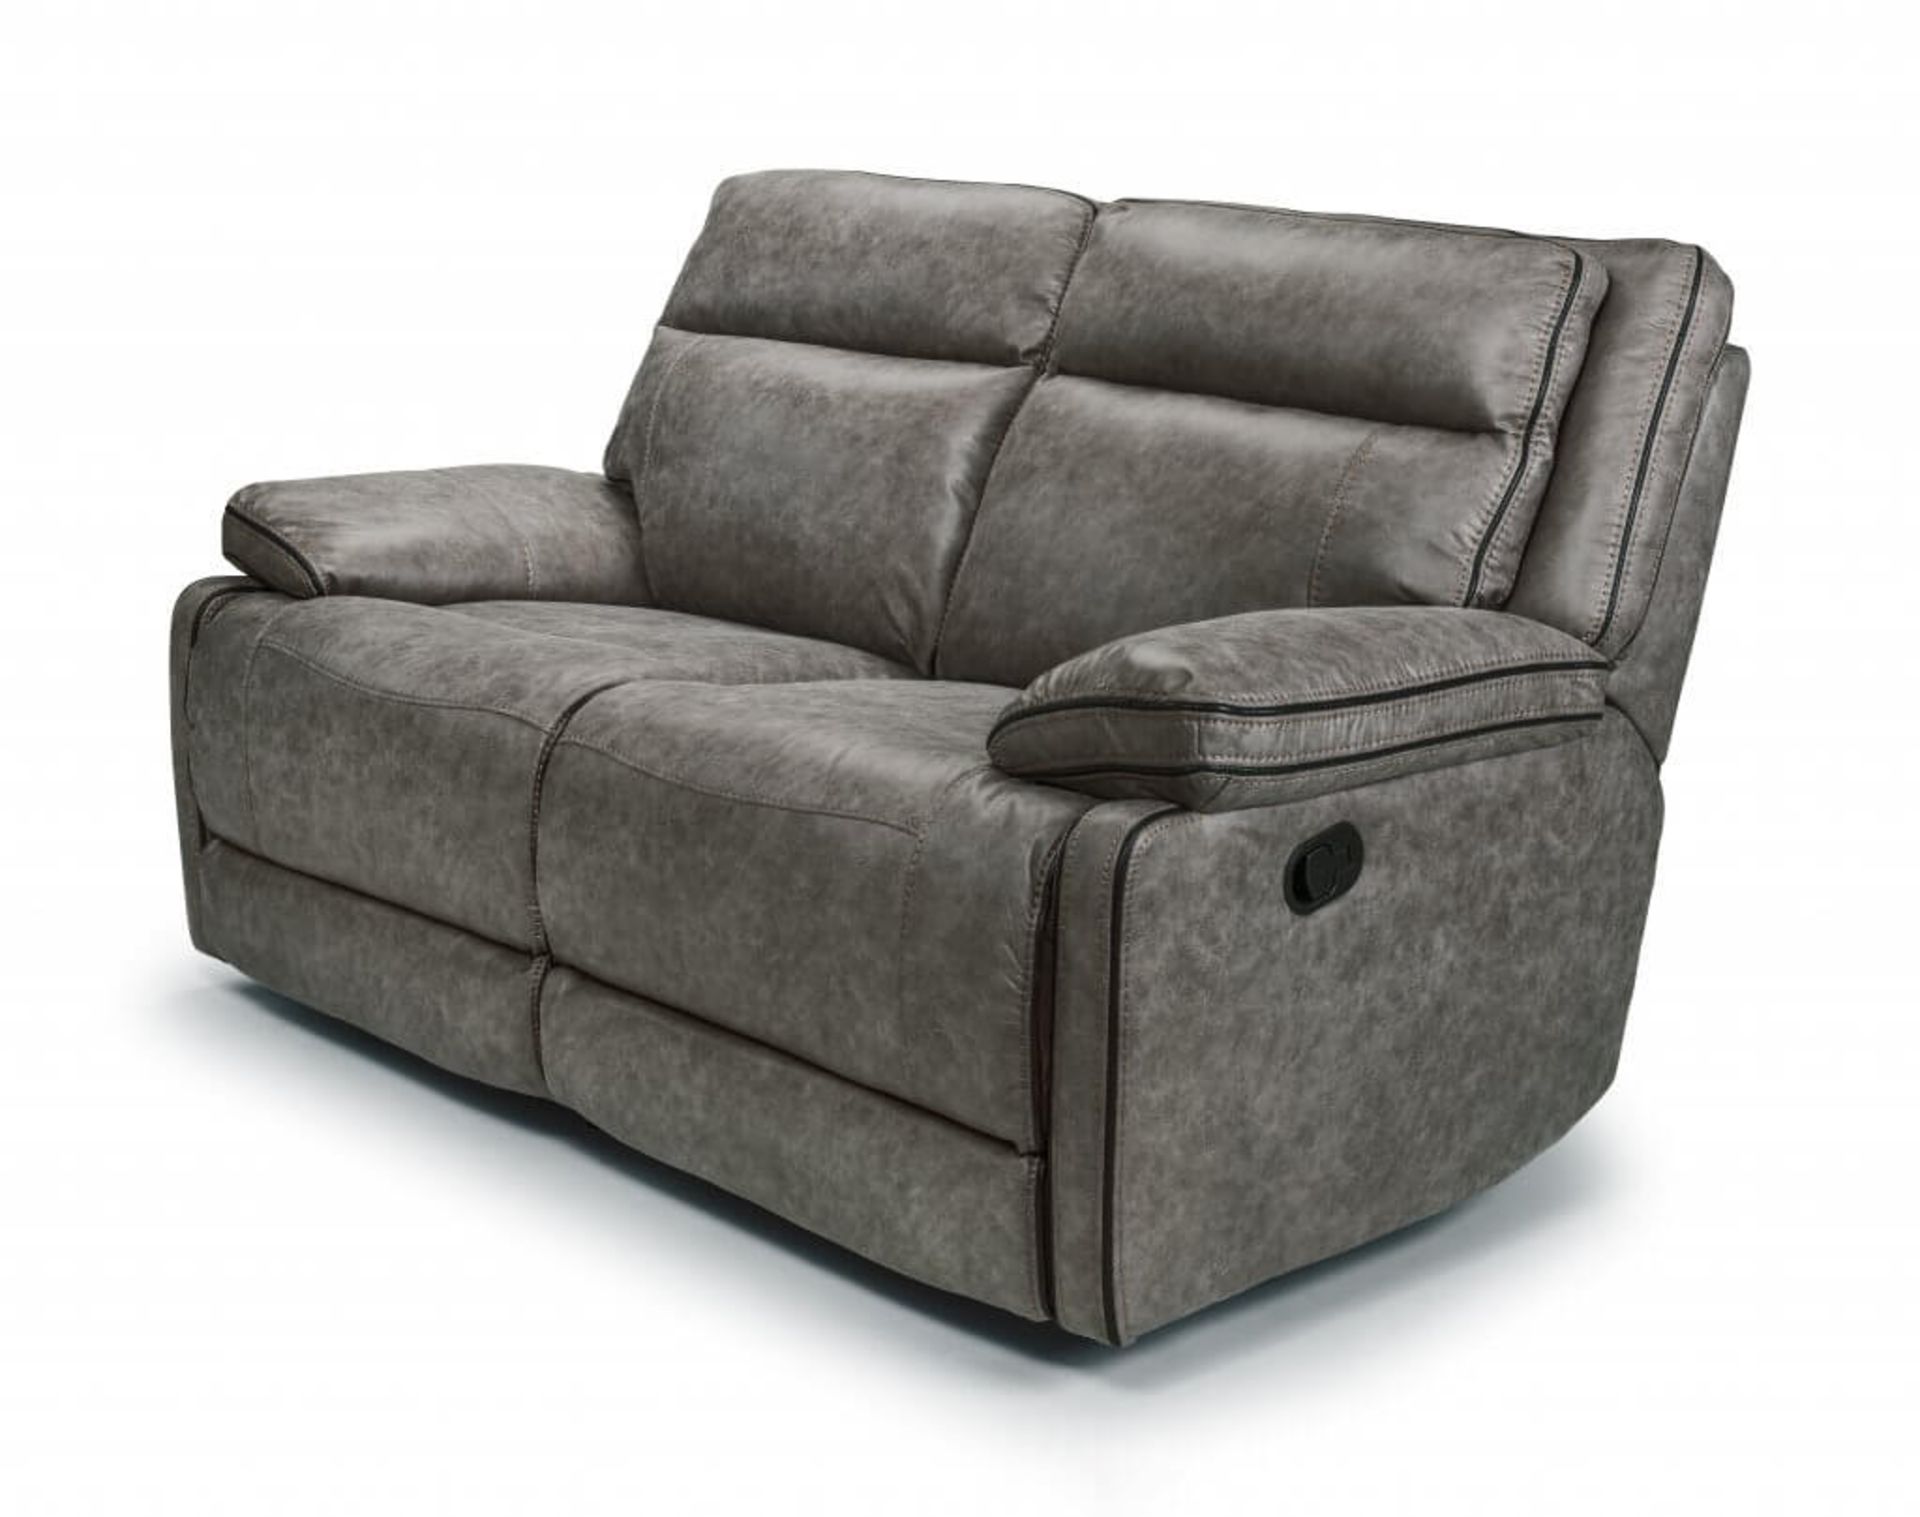 Brand new boxed cheltenham 2 seater dark grey leather manual reclining sofa